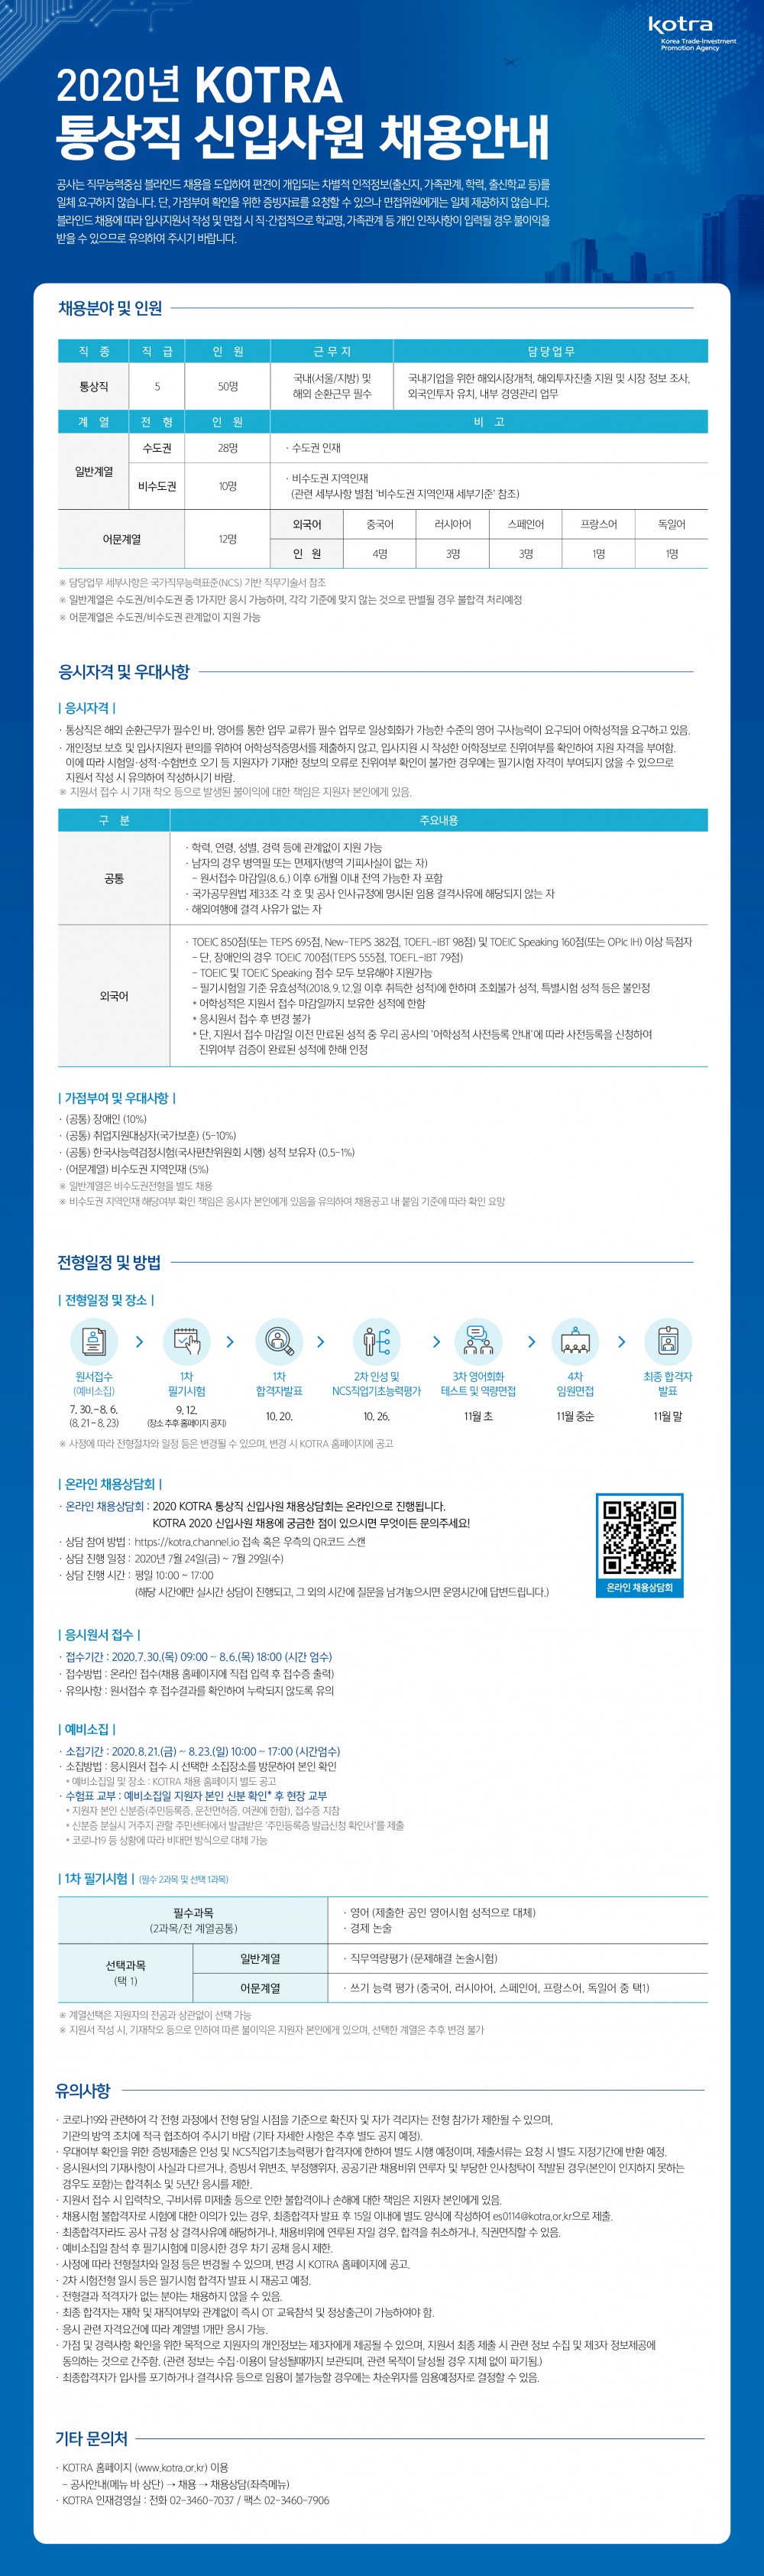 2020 KOTRA 신입사원 채용안내_웹공고문(온라인 채용상담회)_0722